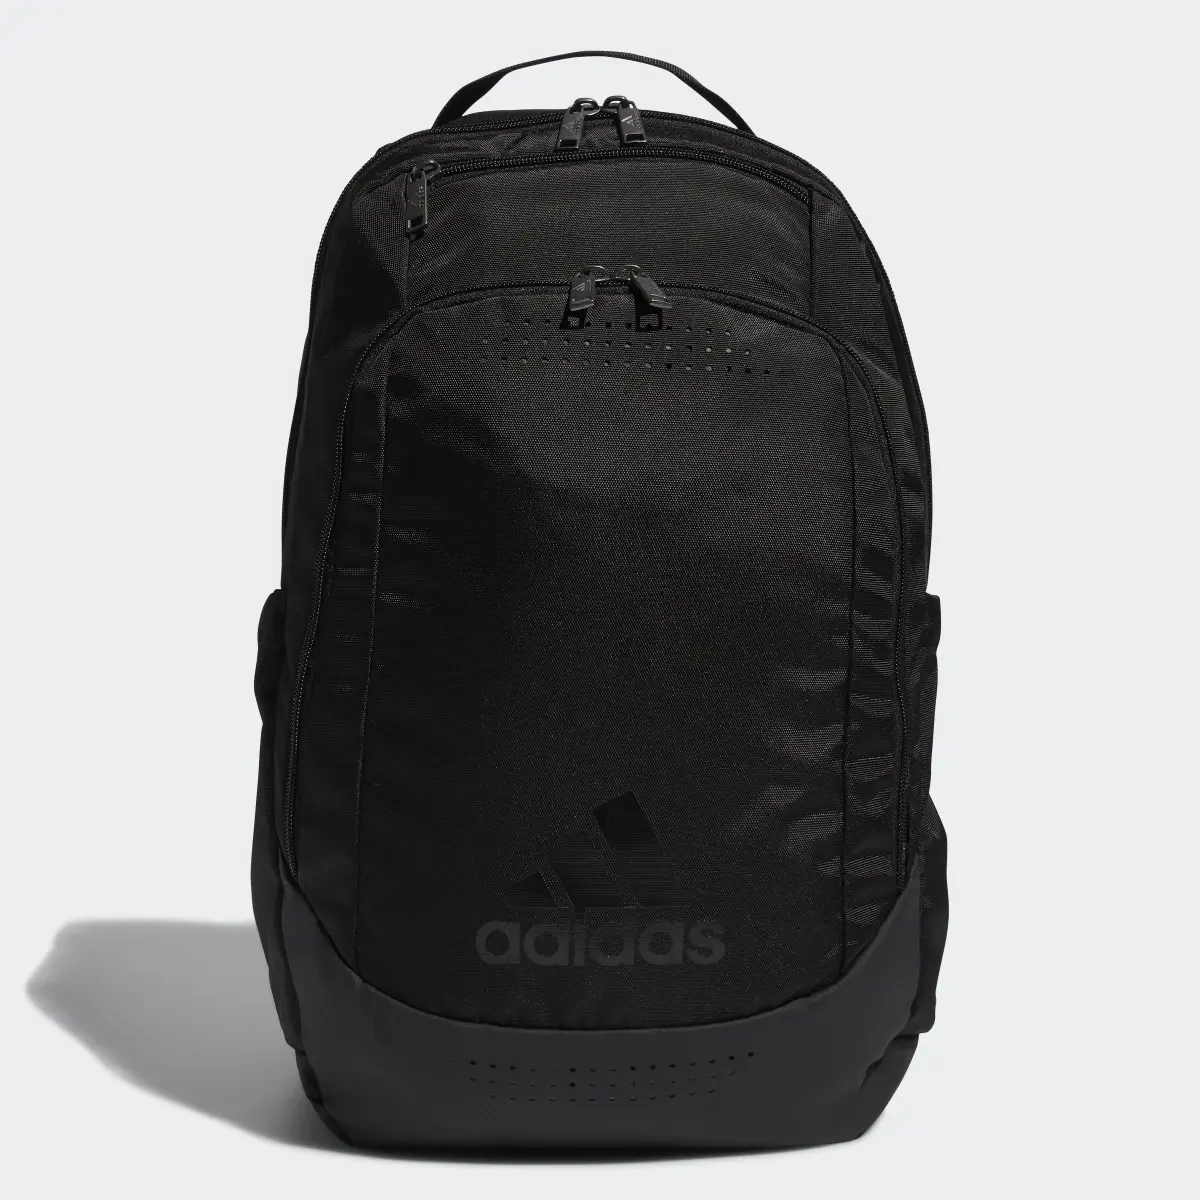 Adidas Defender Team Backpack. 2